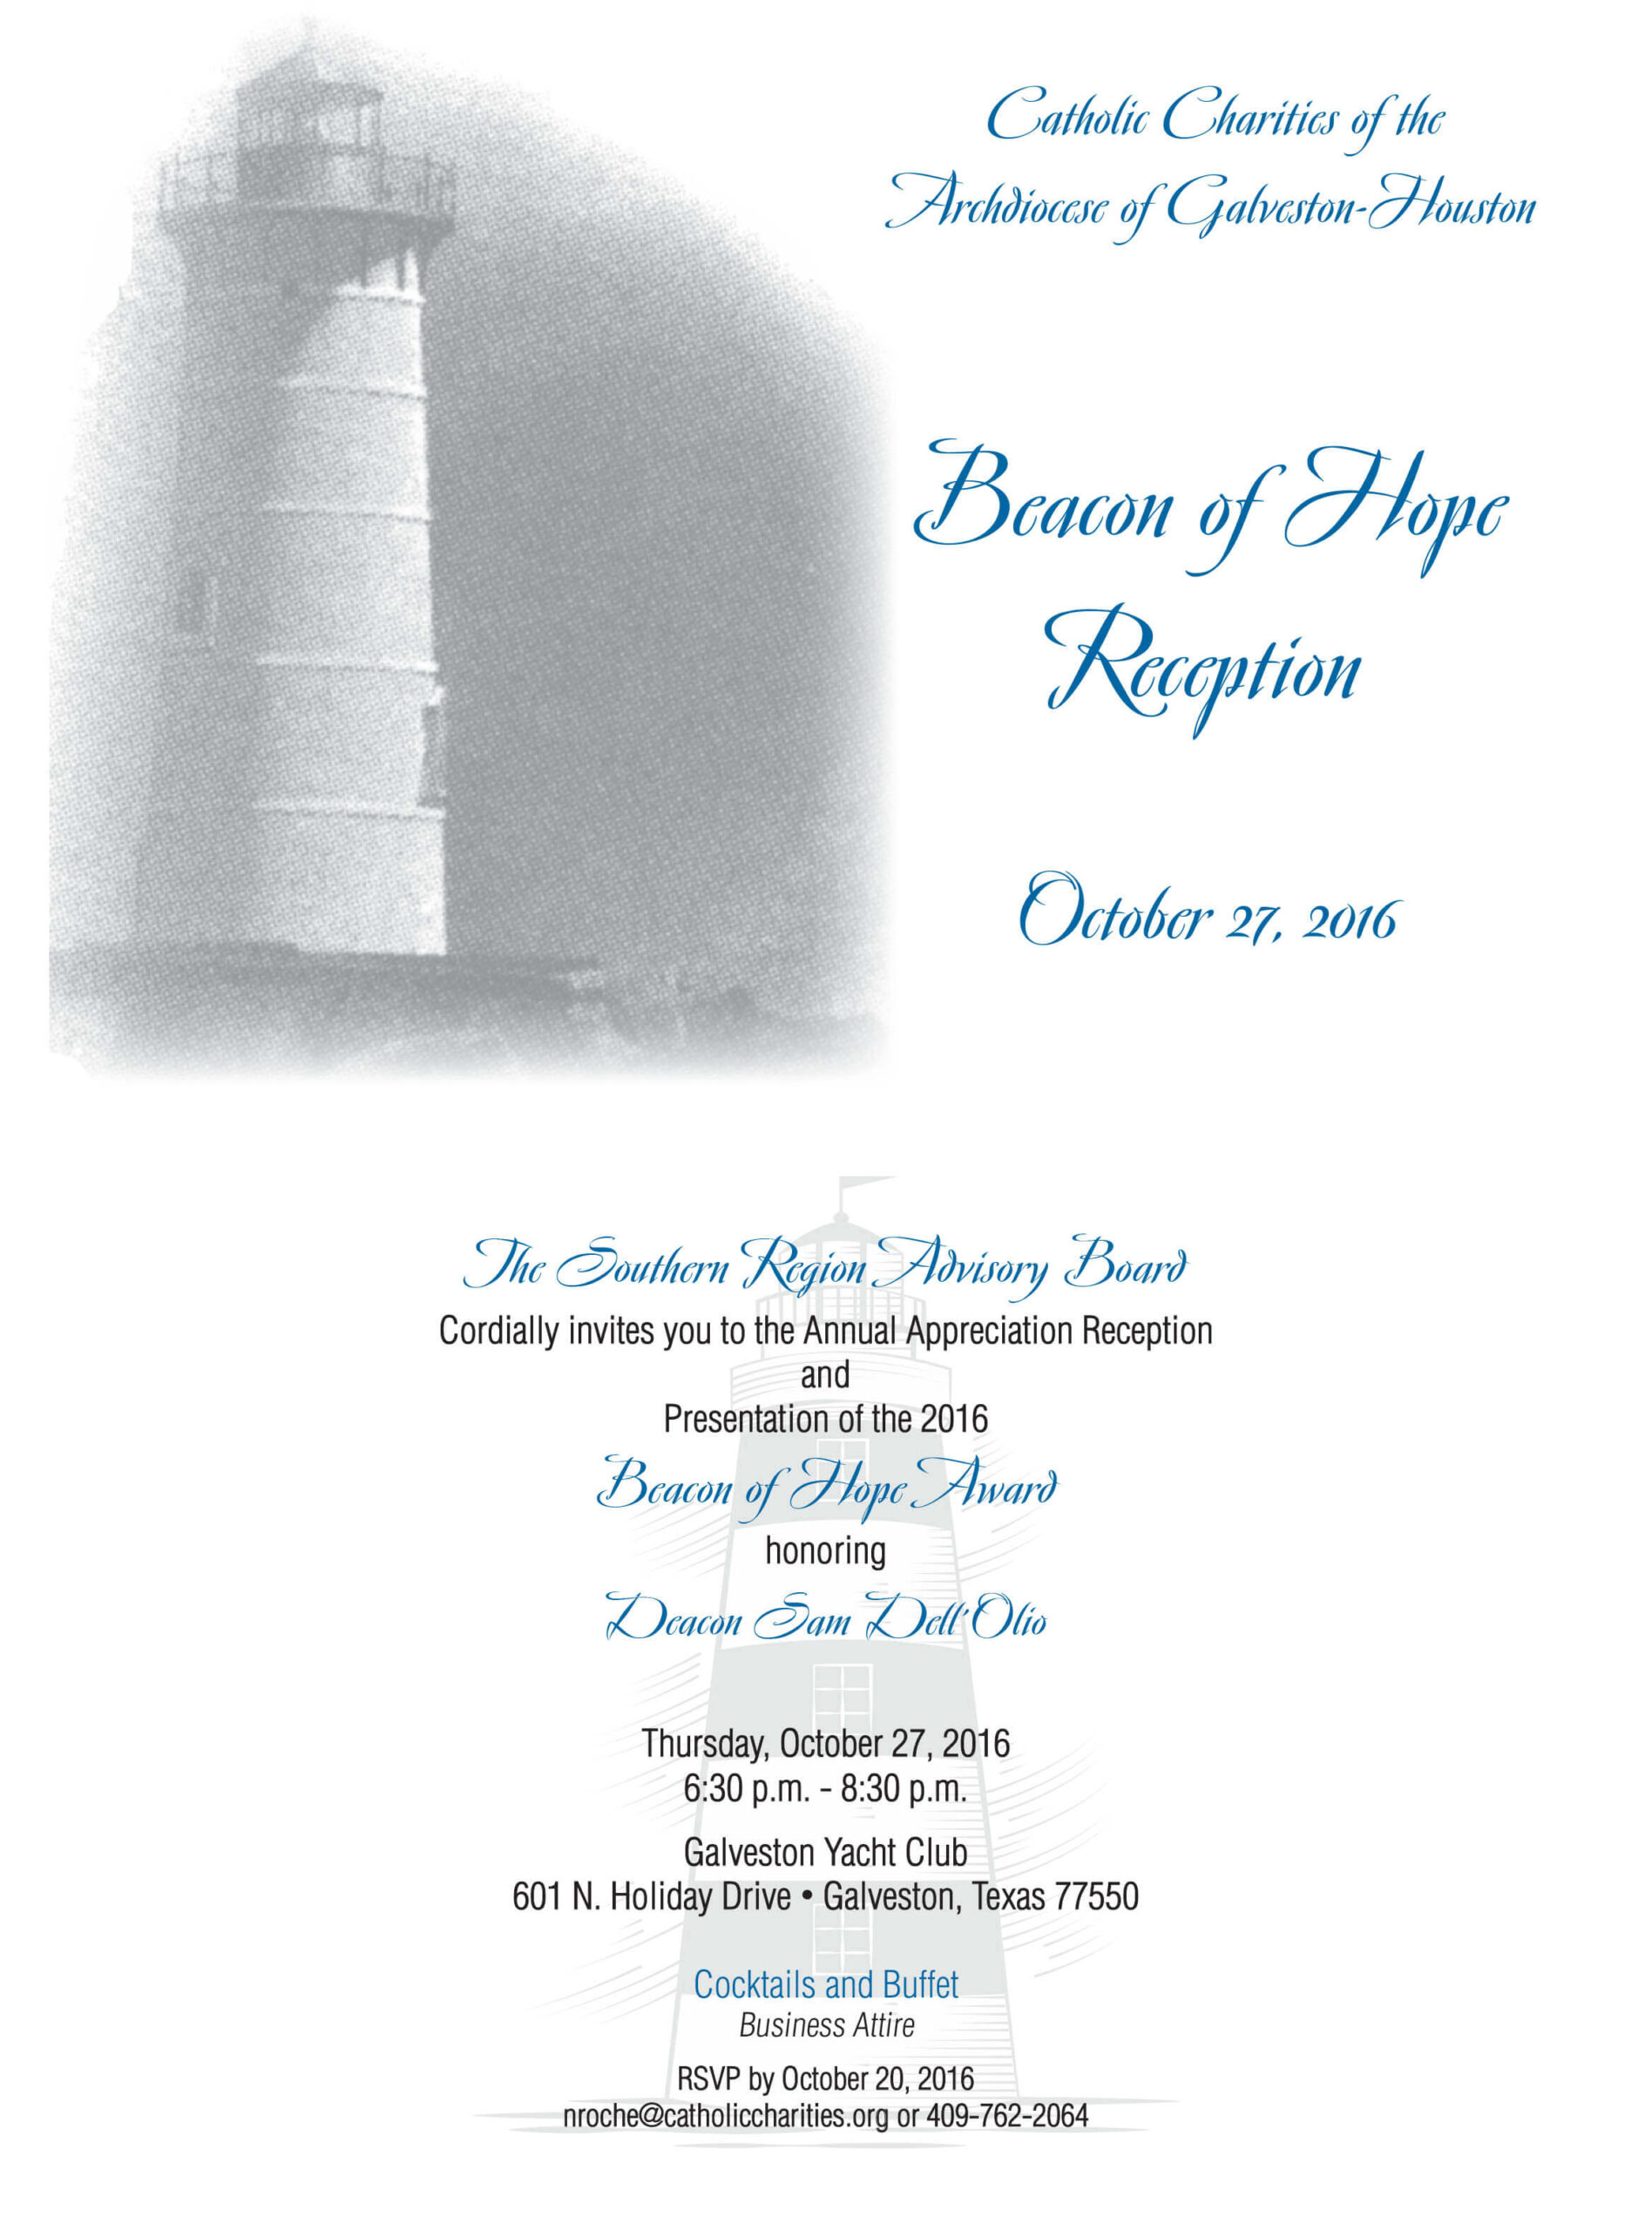 Galveston Beacon of Hope Reception 2